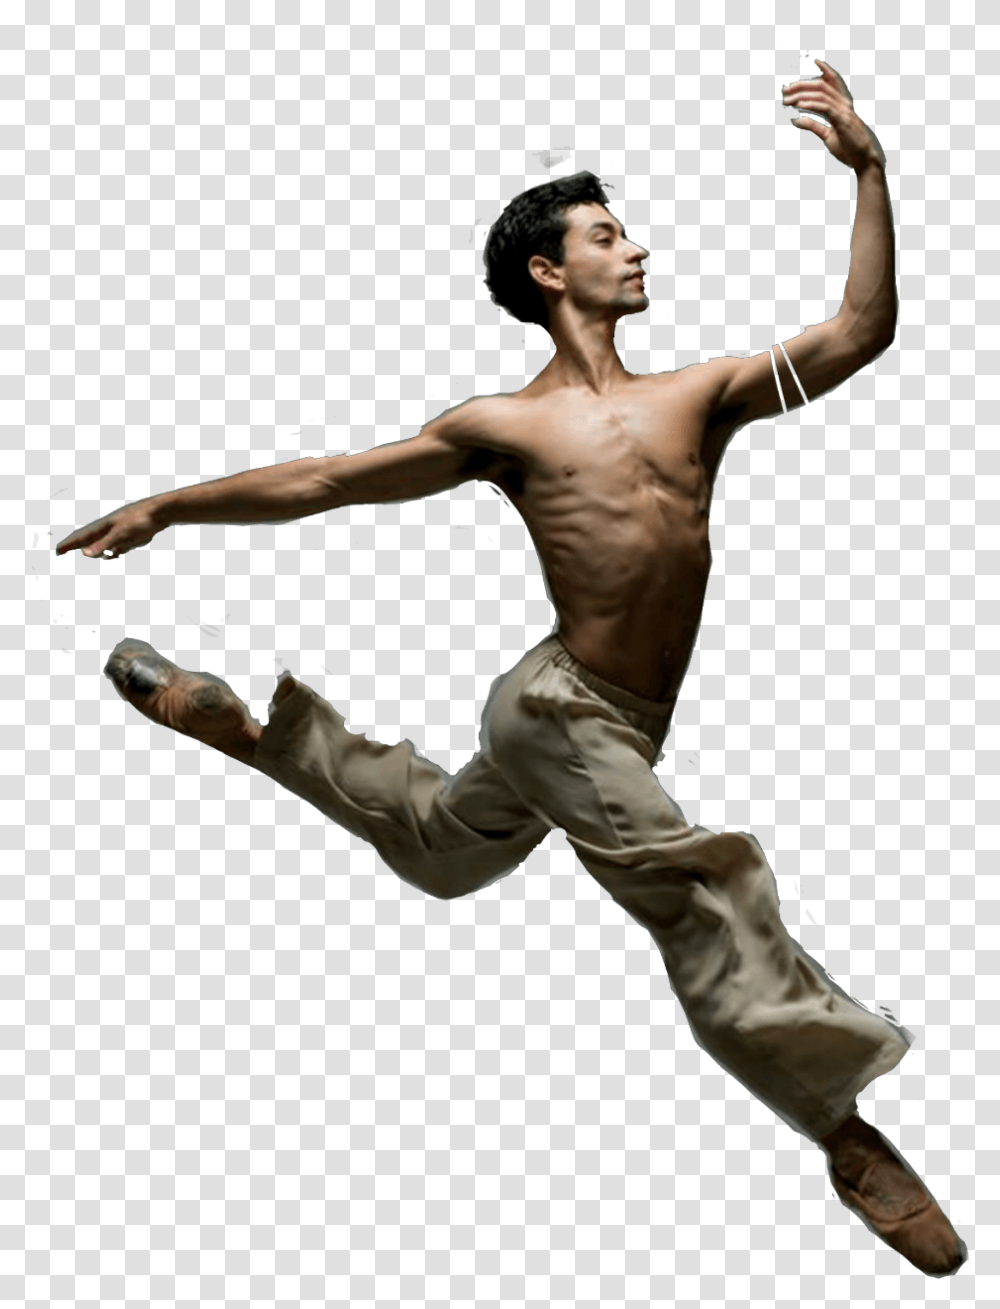 Man Jumping Dance Dancing Fullfigure Jumping, Person, Human, Ballet, Ballerina Transparent Png